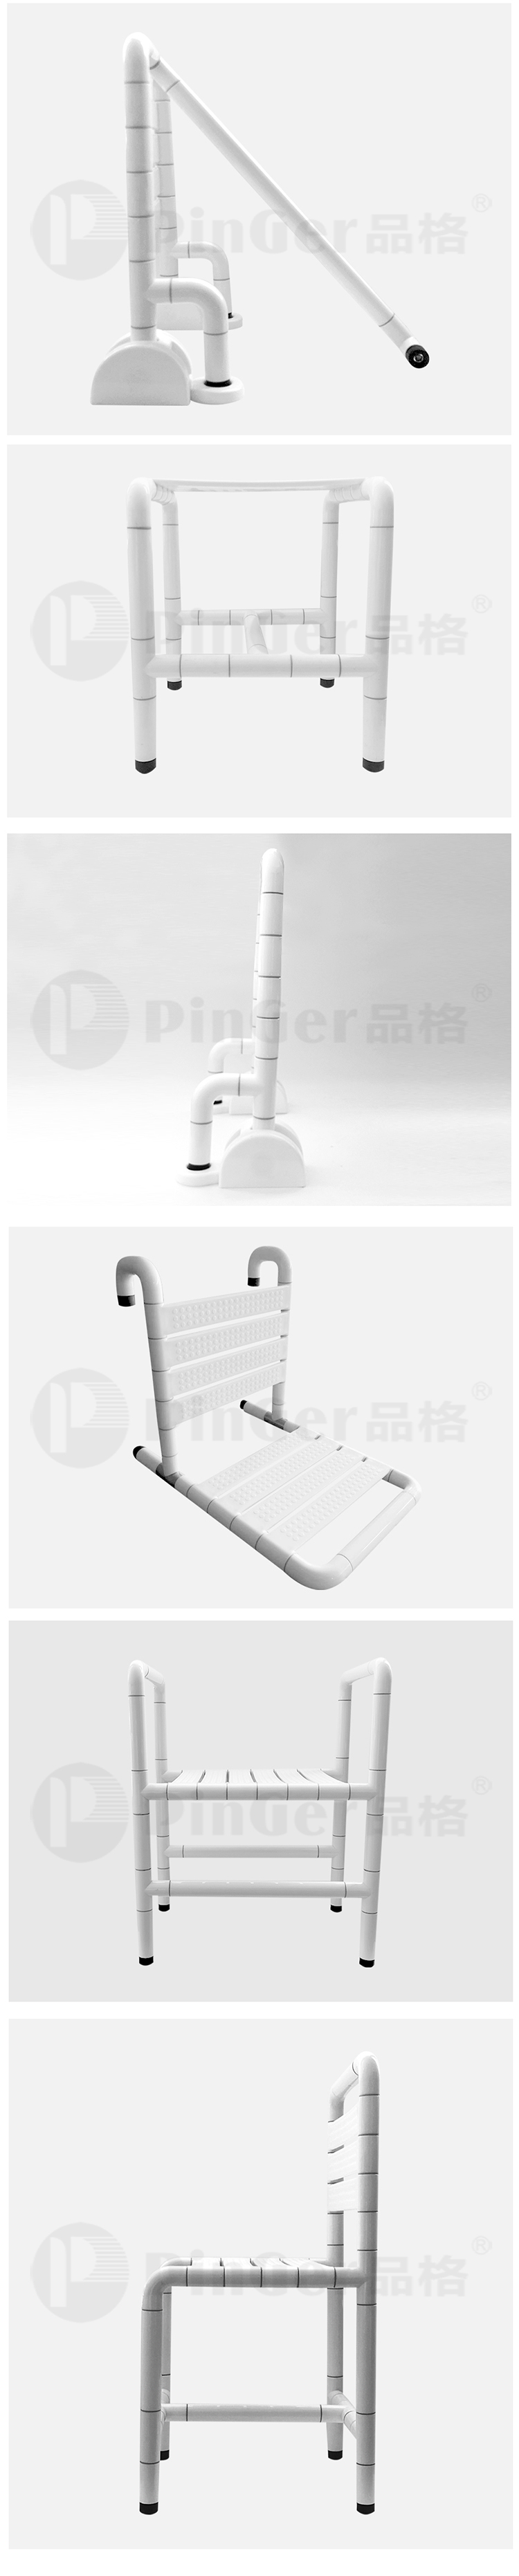 Handicapped Bathroom Accessories Nylon Shower Chair